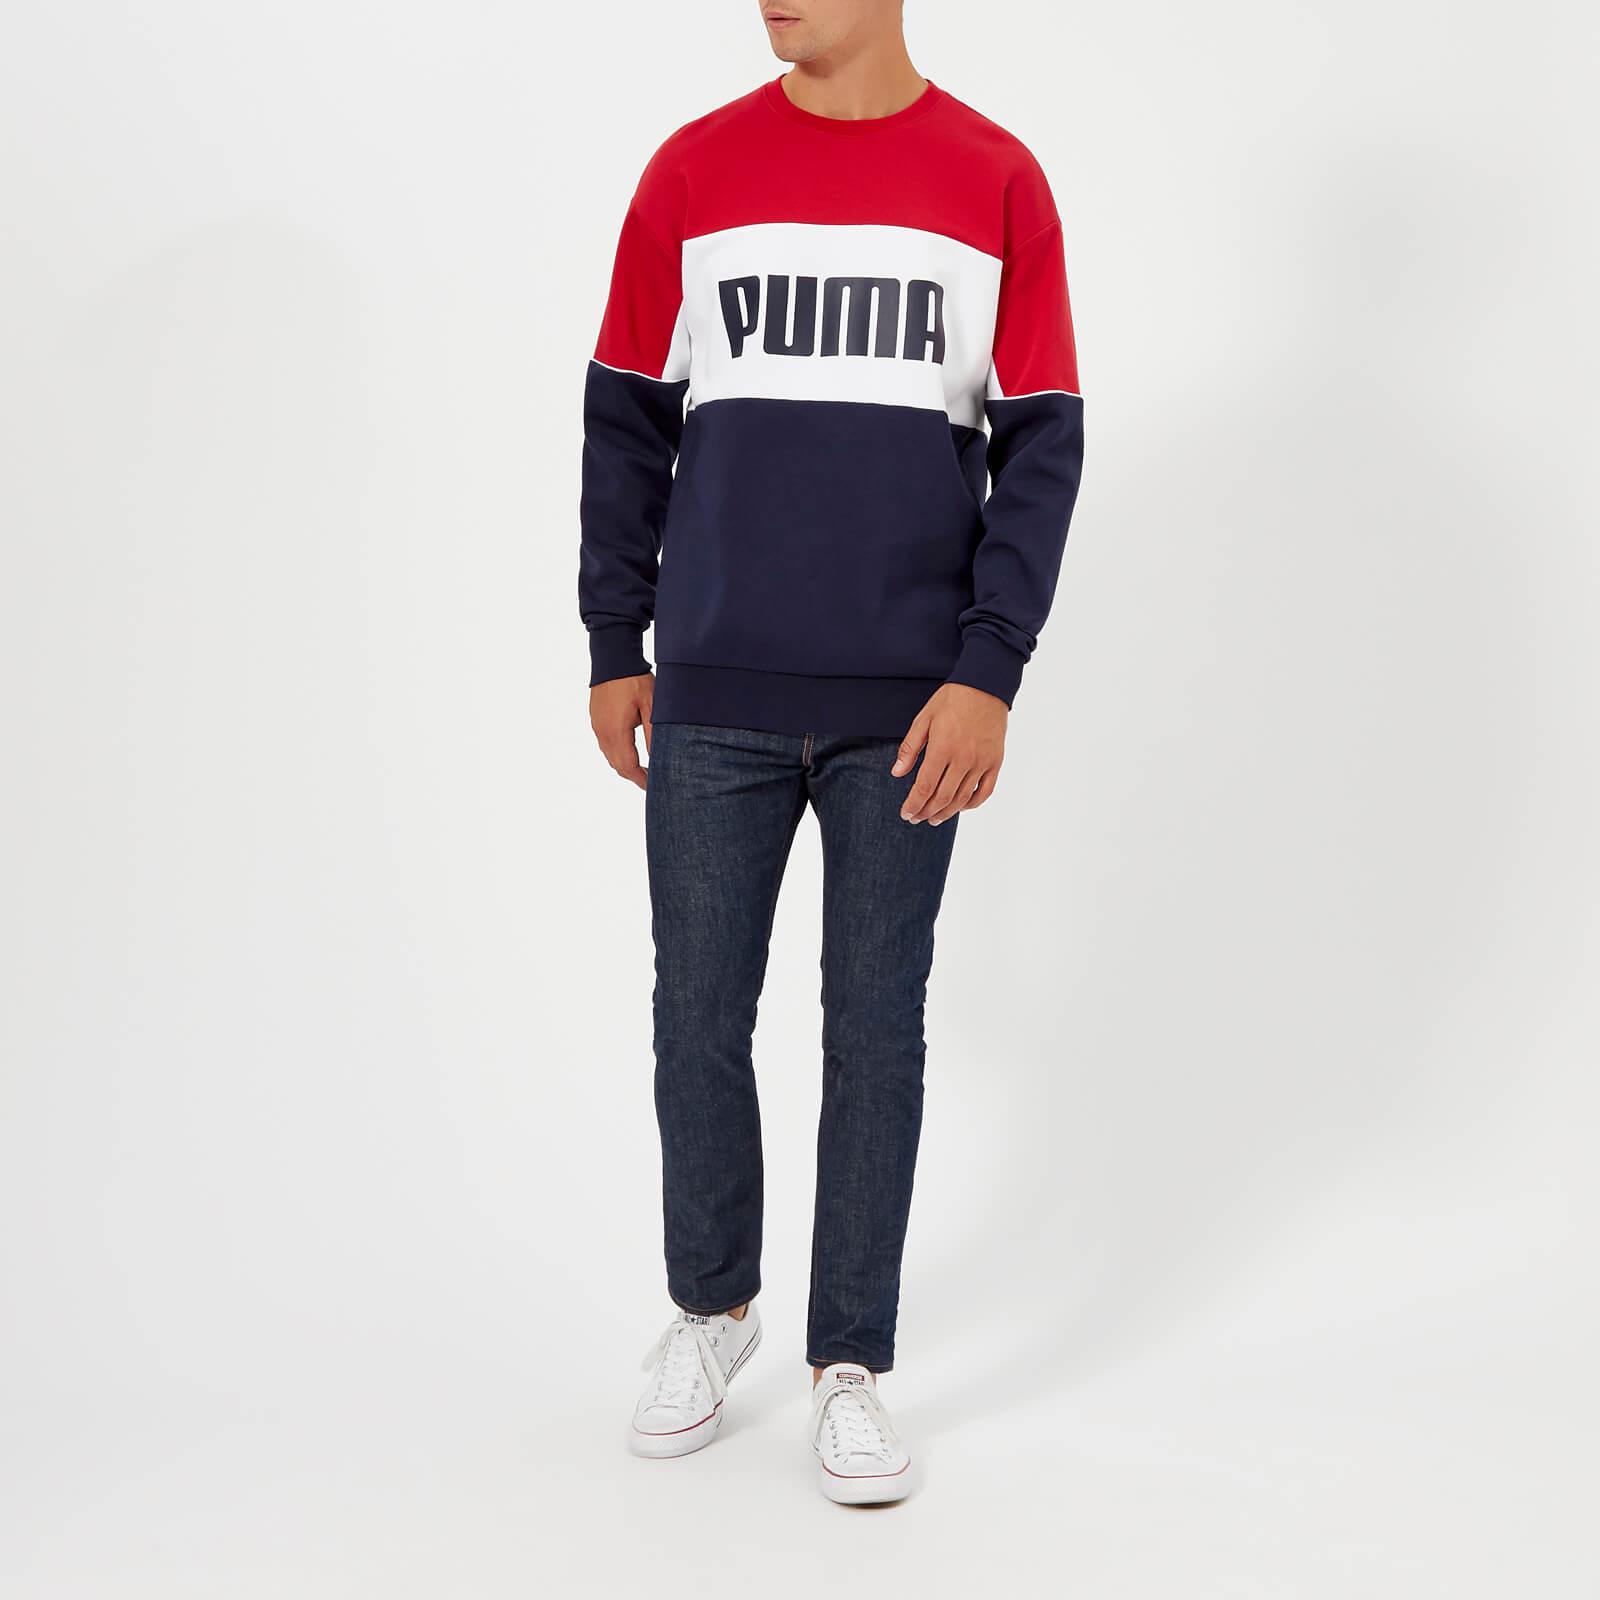 PUMA Sweatshirt in Red/White/Blue (Blue) for Men - Lyst